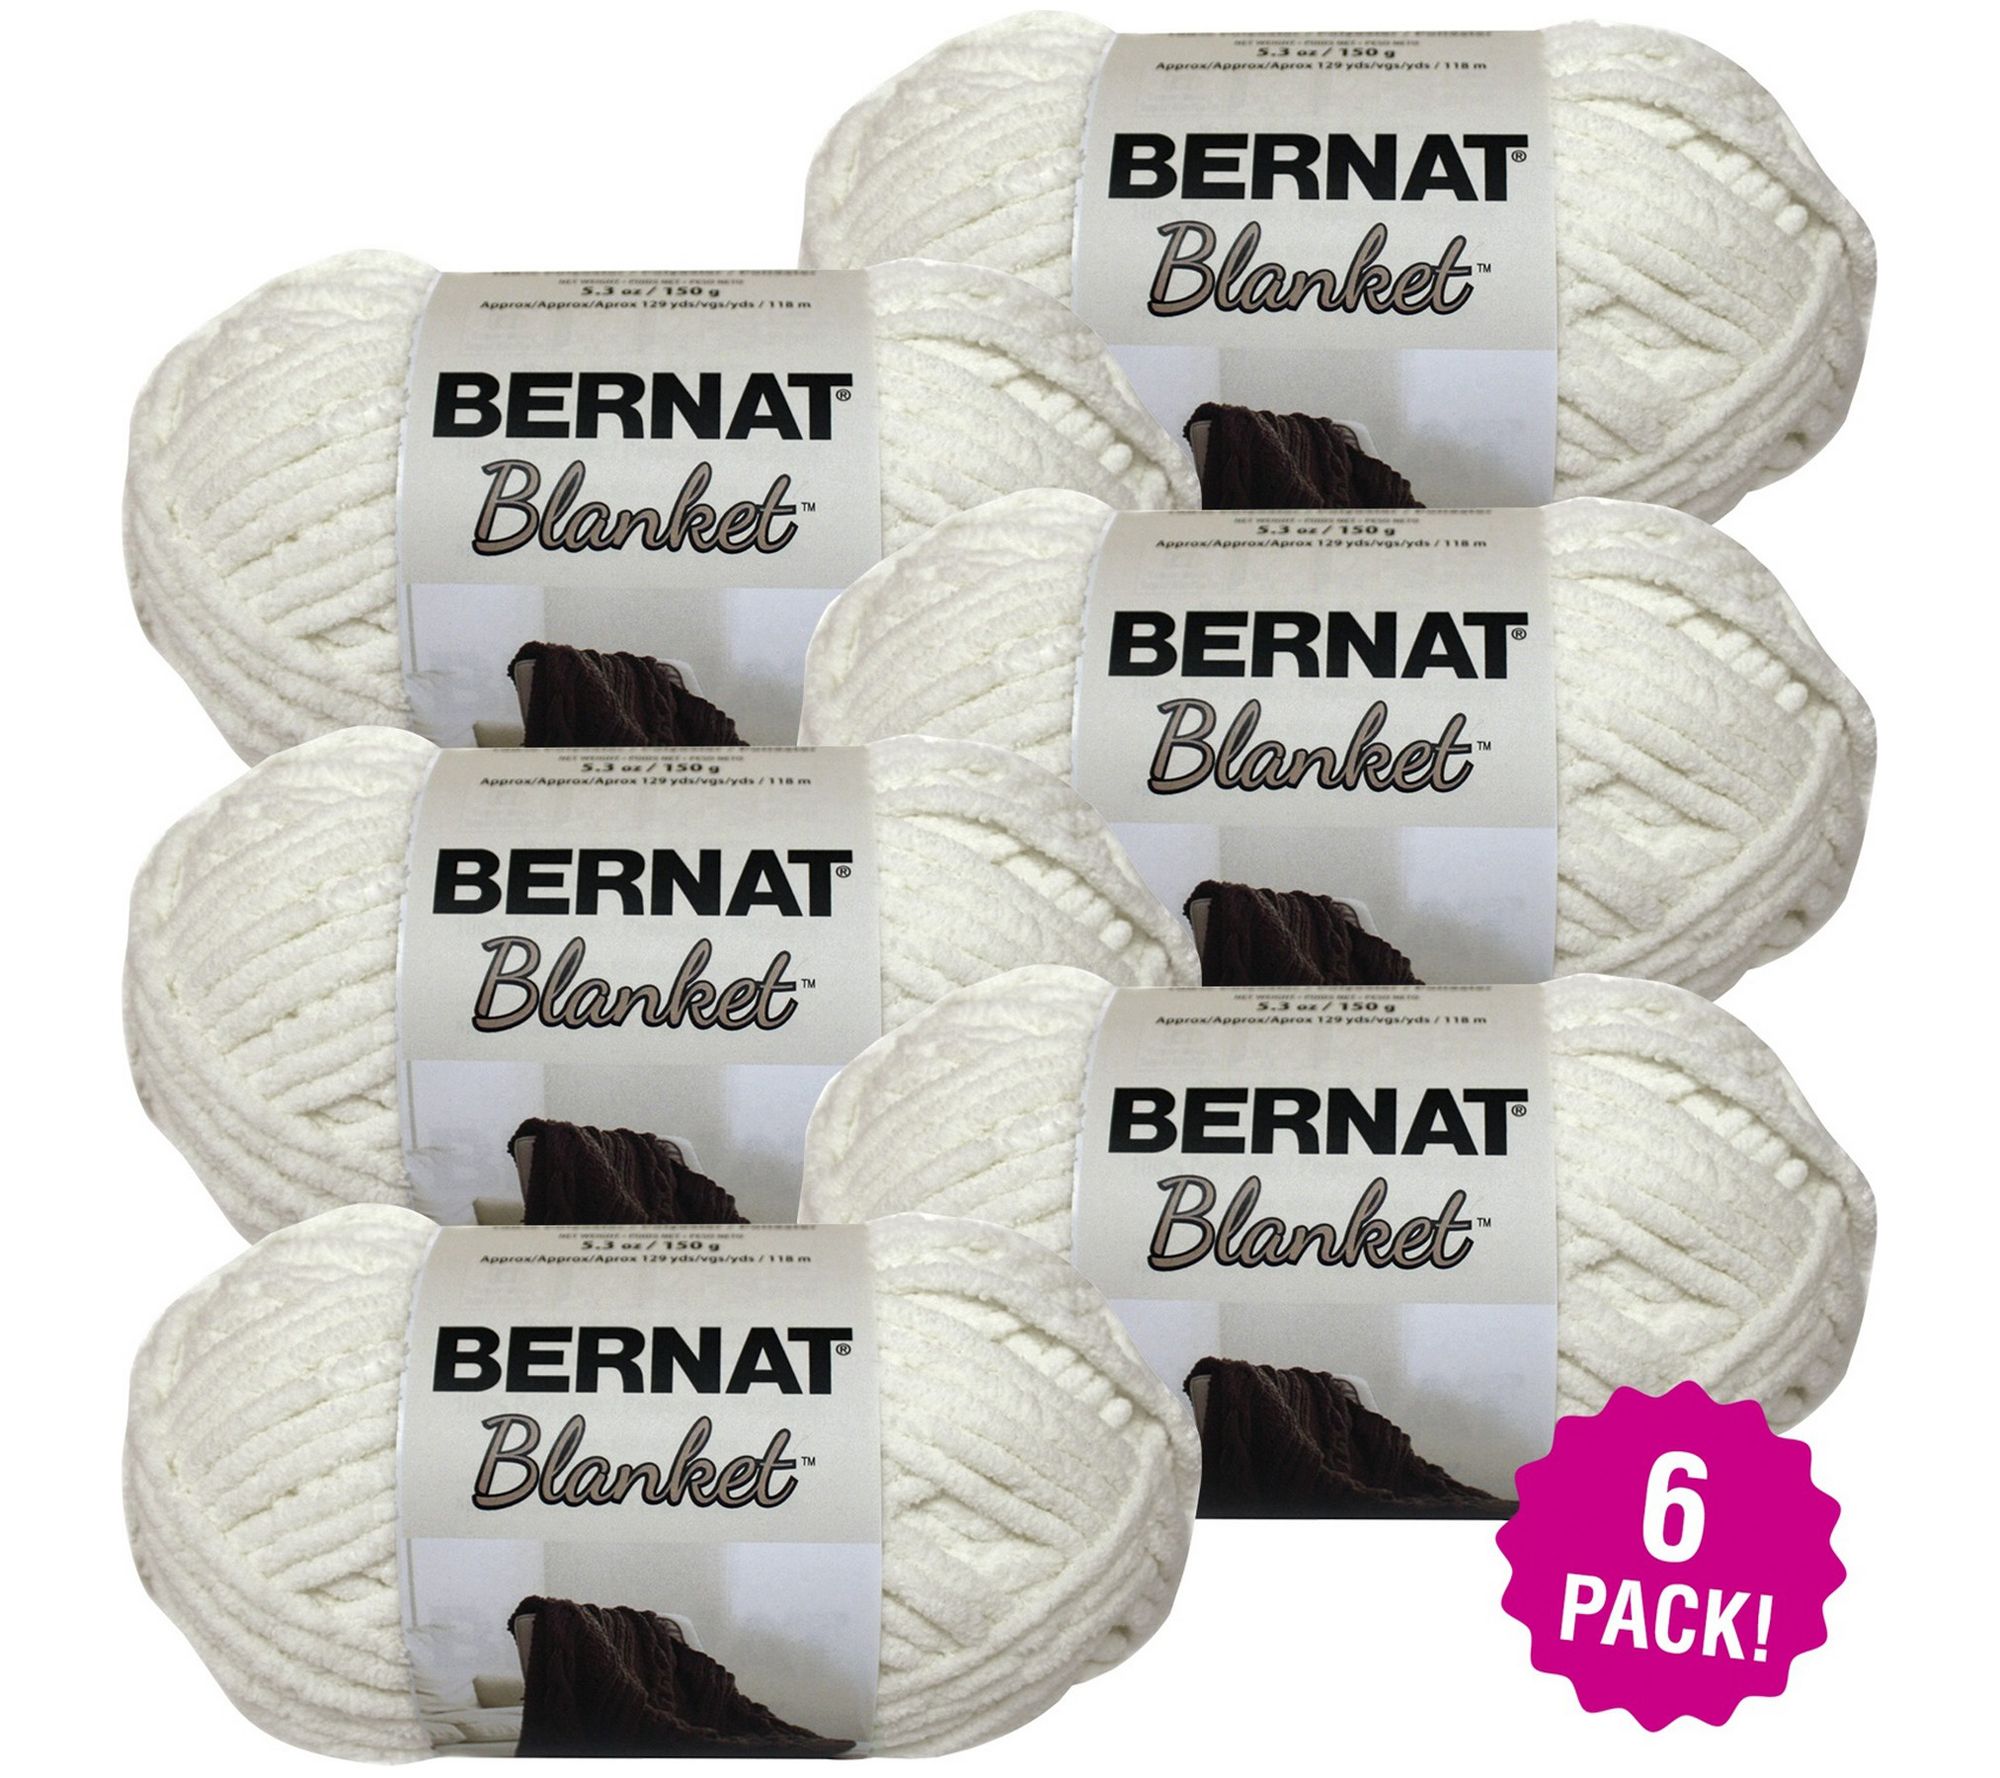 Bernat Blanket Big Ball Yarn - Country Blue Multipack of 4